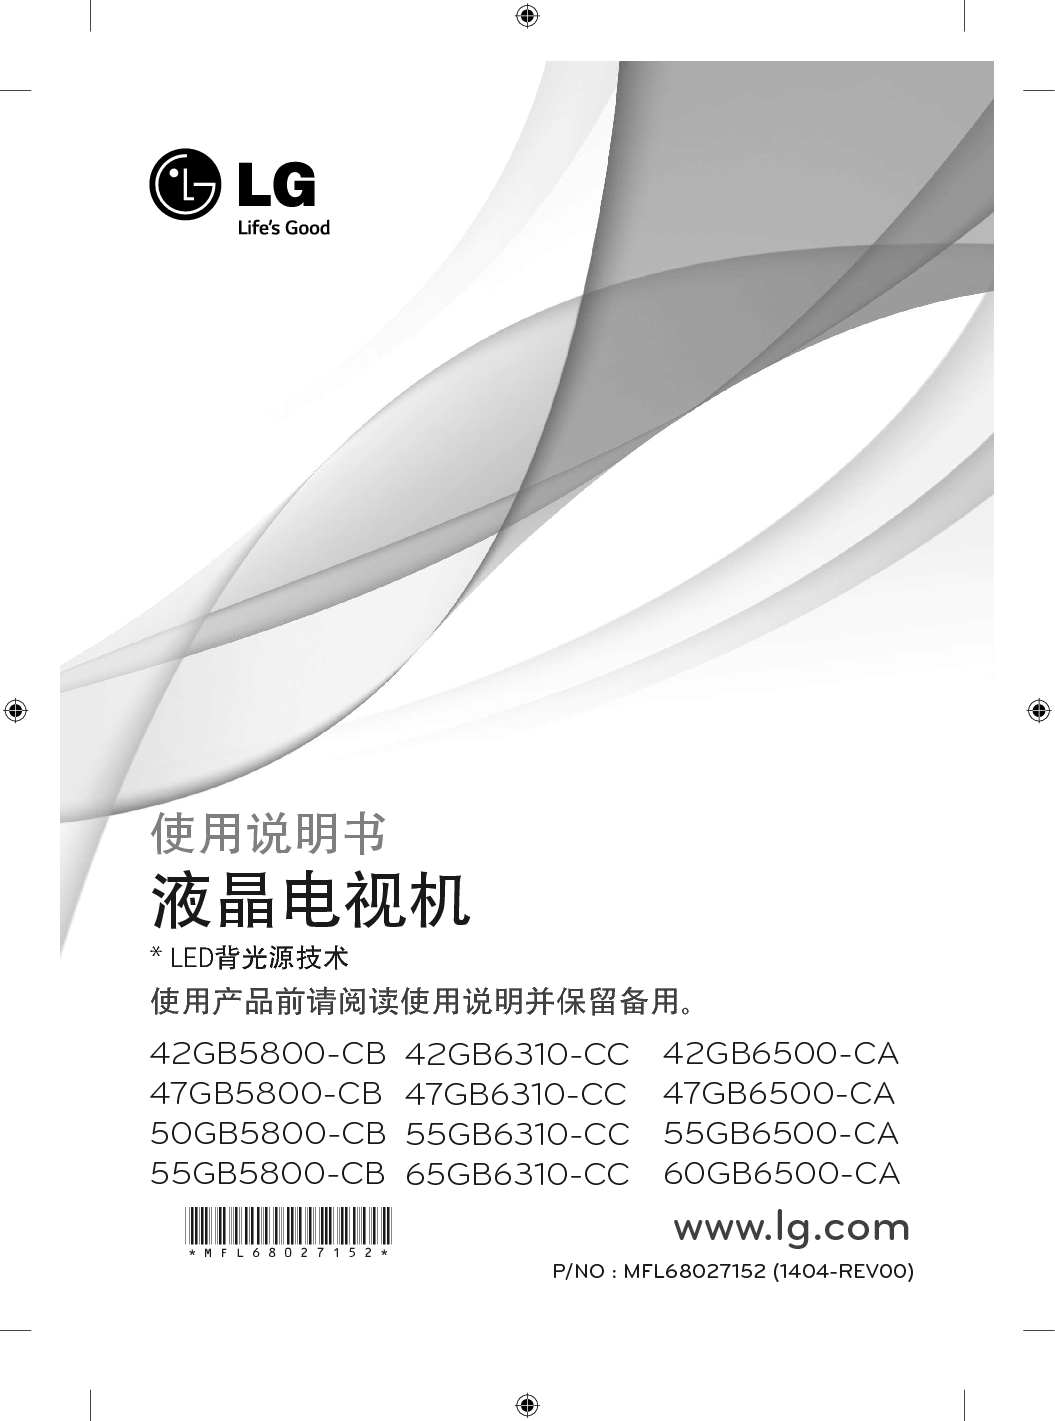 LG 42GB5800-CB, 42GB6310-CC, 55GB6500-CA 使用说明书 封面